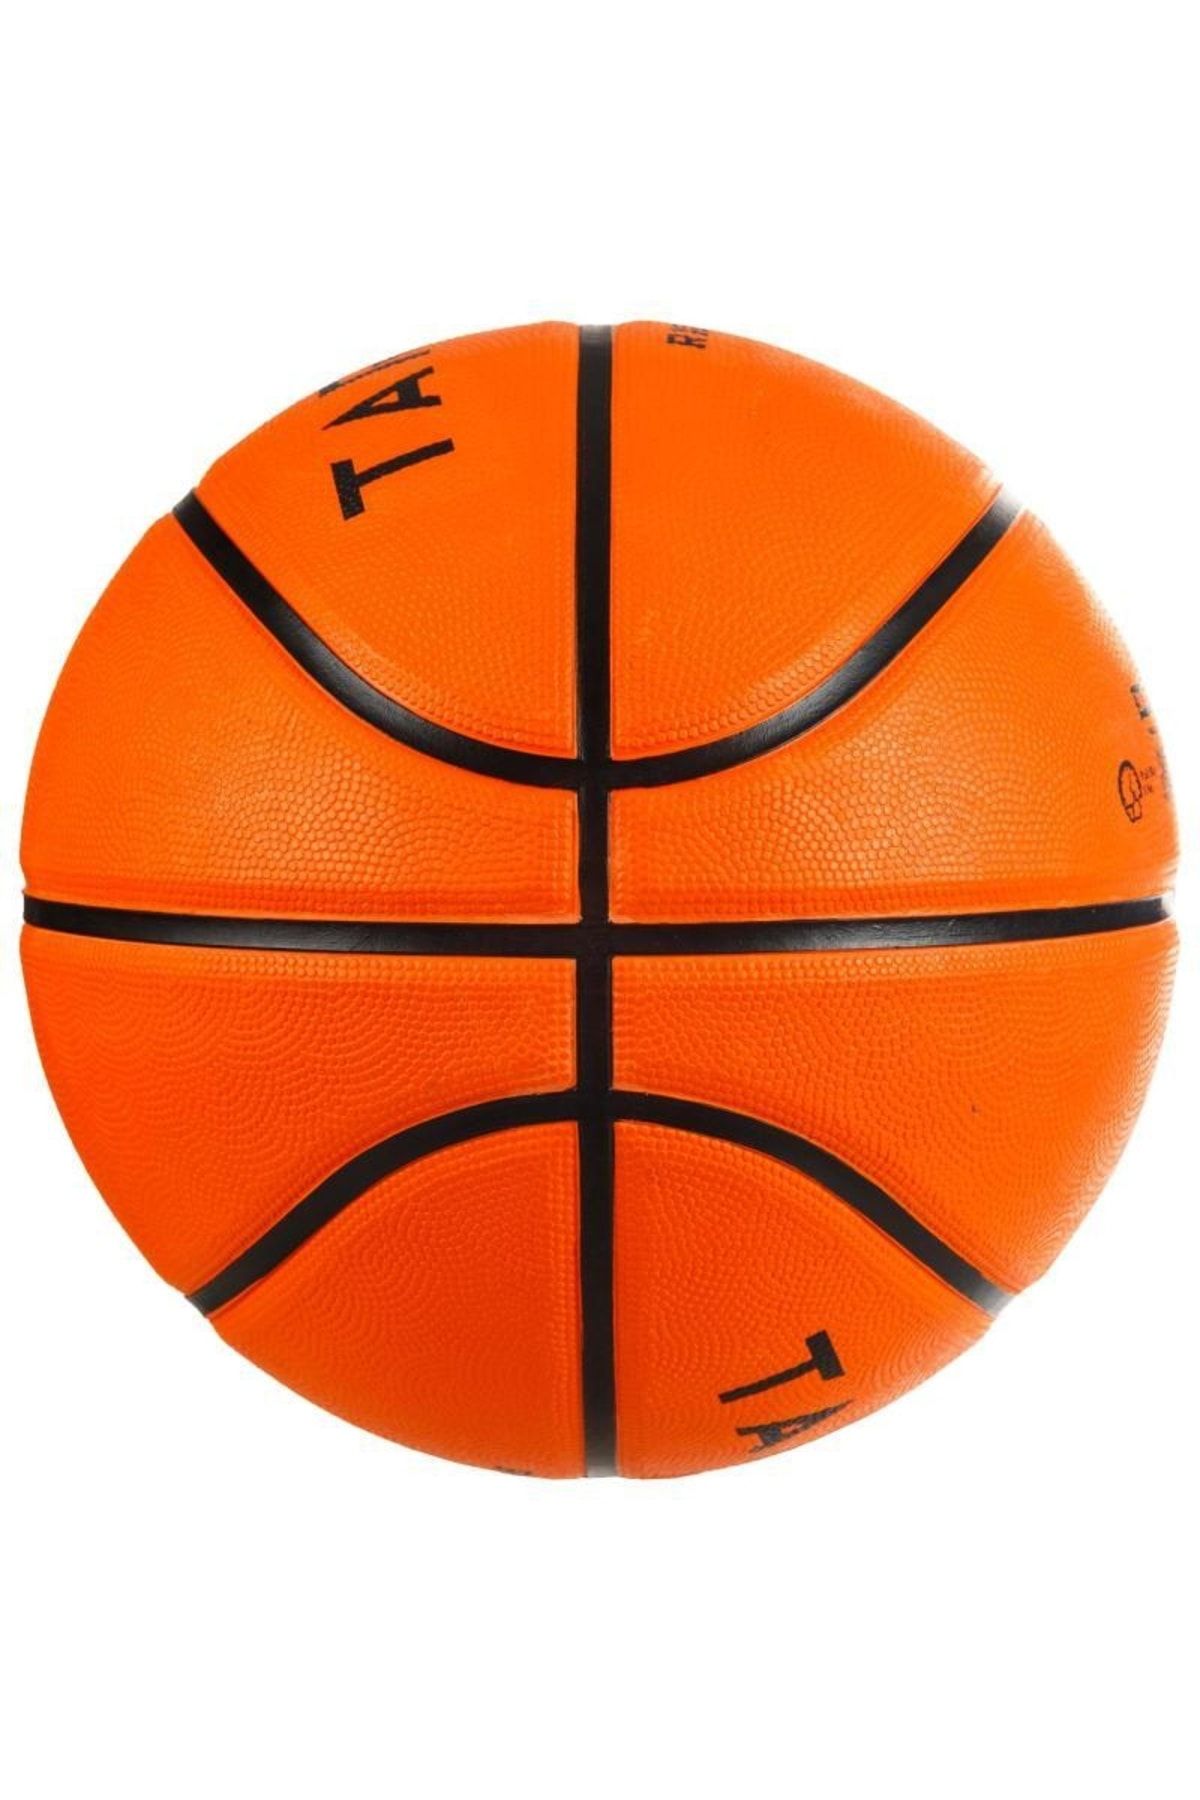 Genel Markalar Tarmak Basketbol Topu R100 7 Numara Turuncu